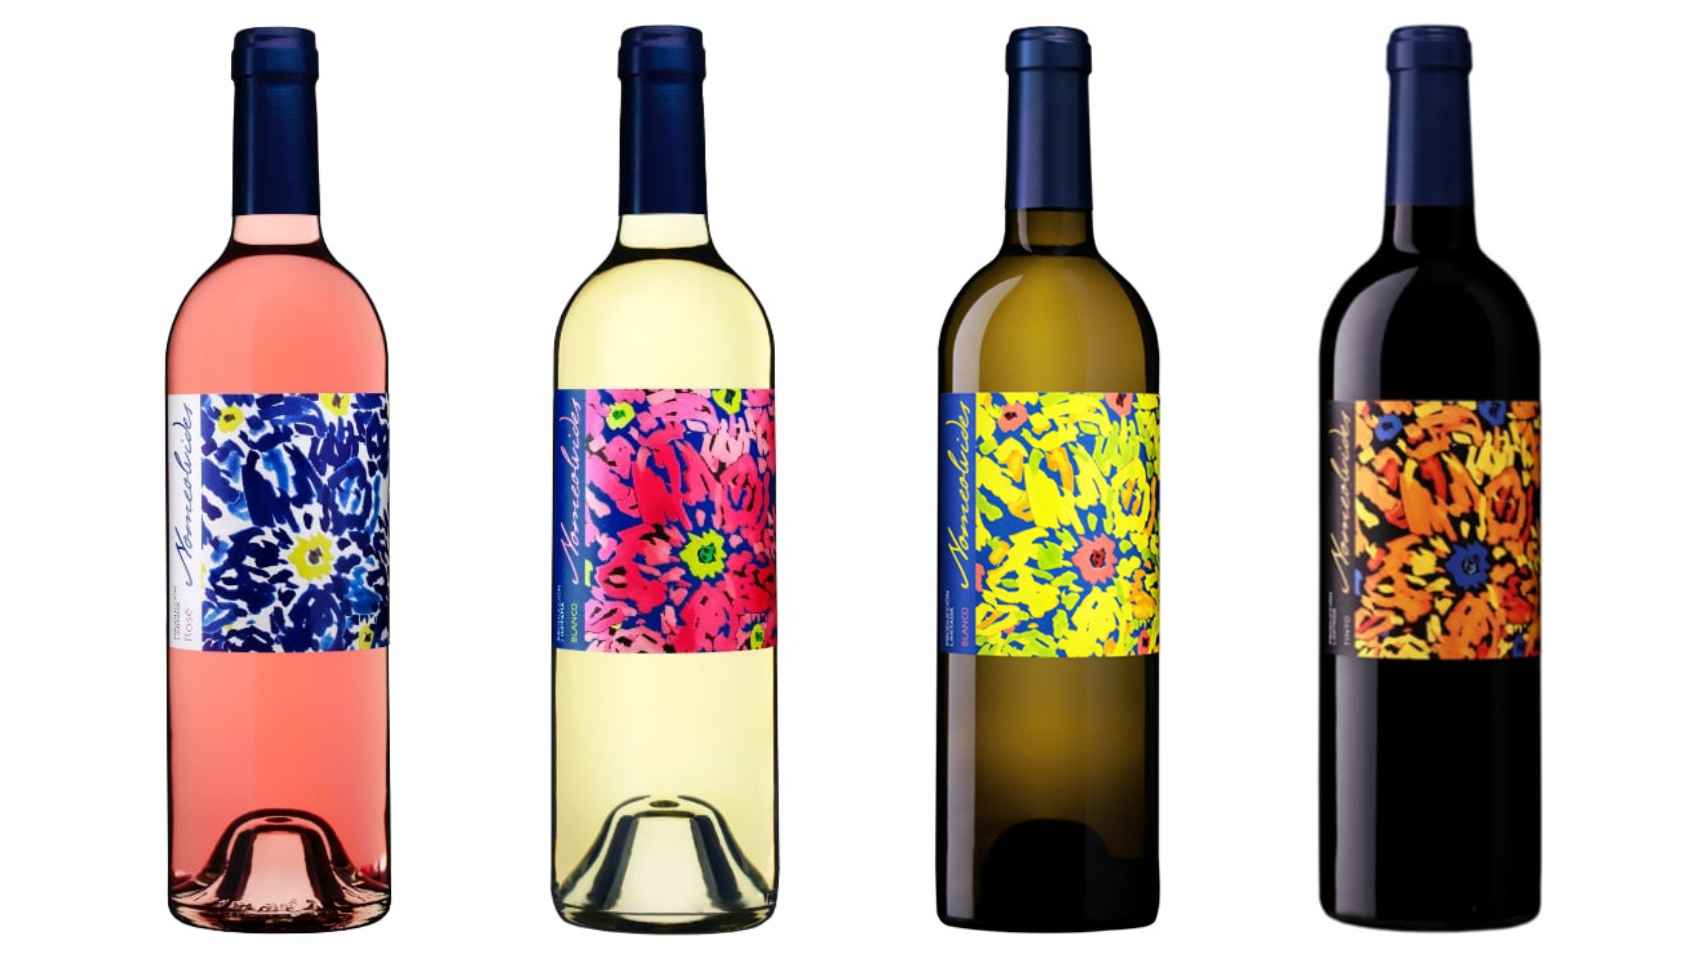 Vinos Nomeolvides, de izda. a dcha.: rosado garnacha, blanco viura, blanco Chardonnay y tinto garnacha.